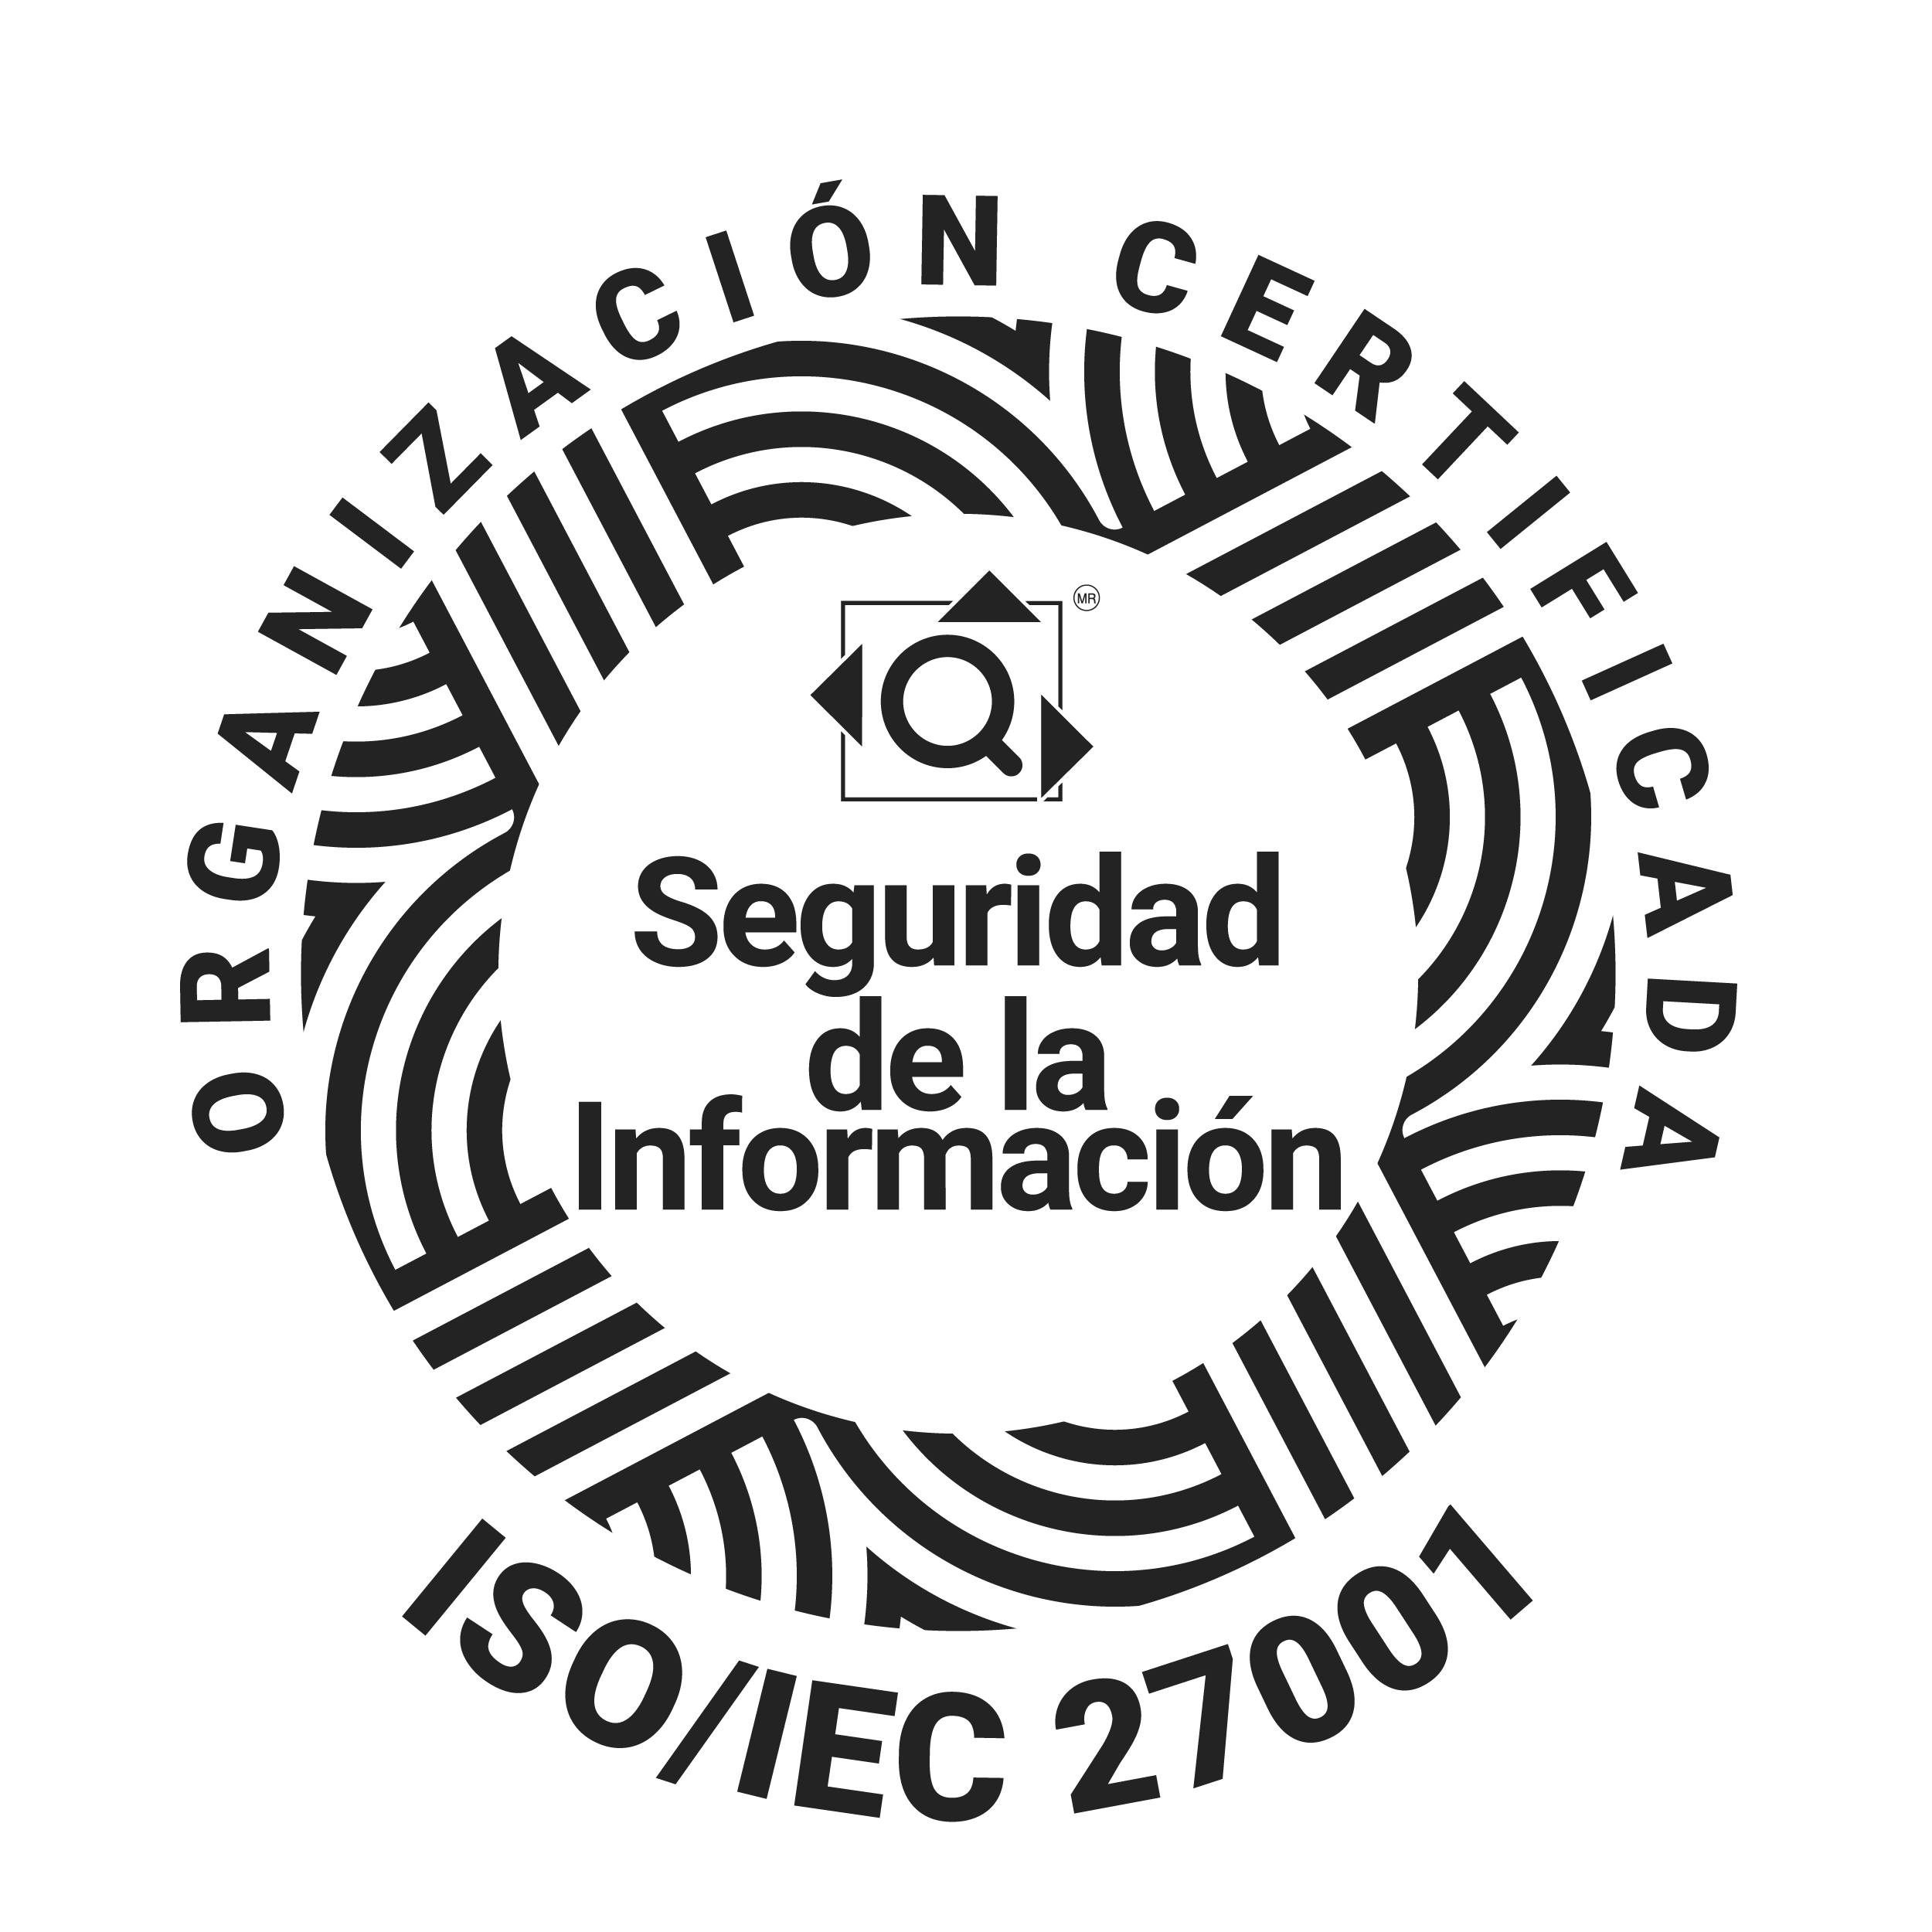 logo ISO